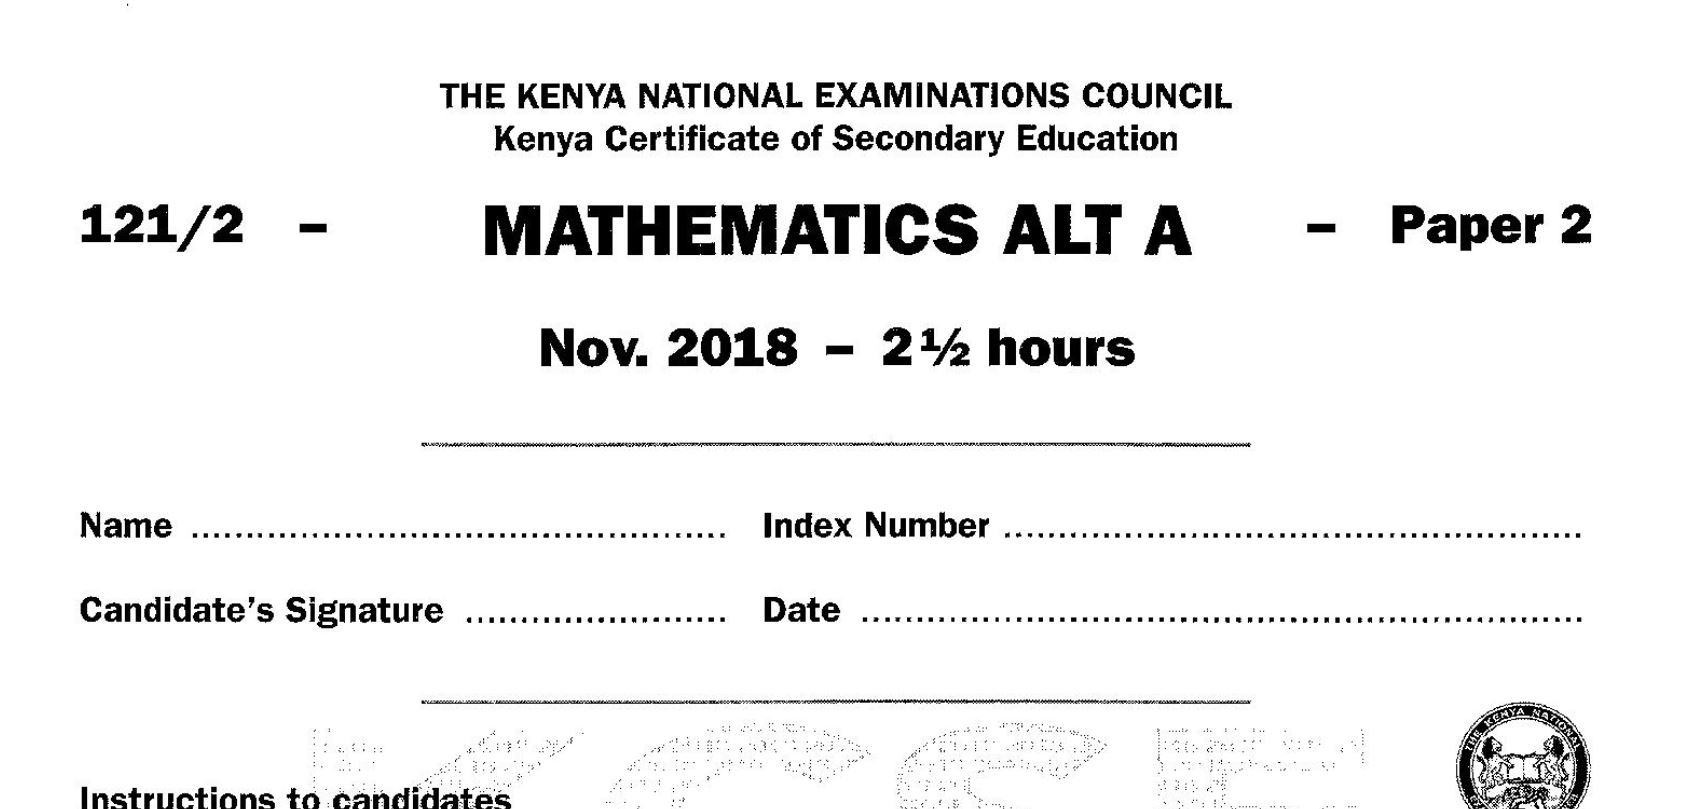 KCSE Mathematics Paper 2, 2018 with KNEC Marking Scheme (Answers)